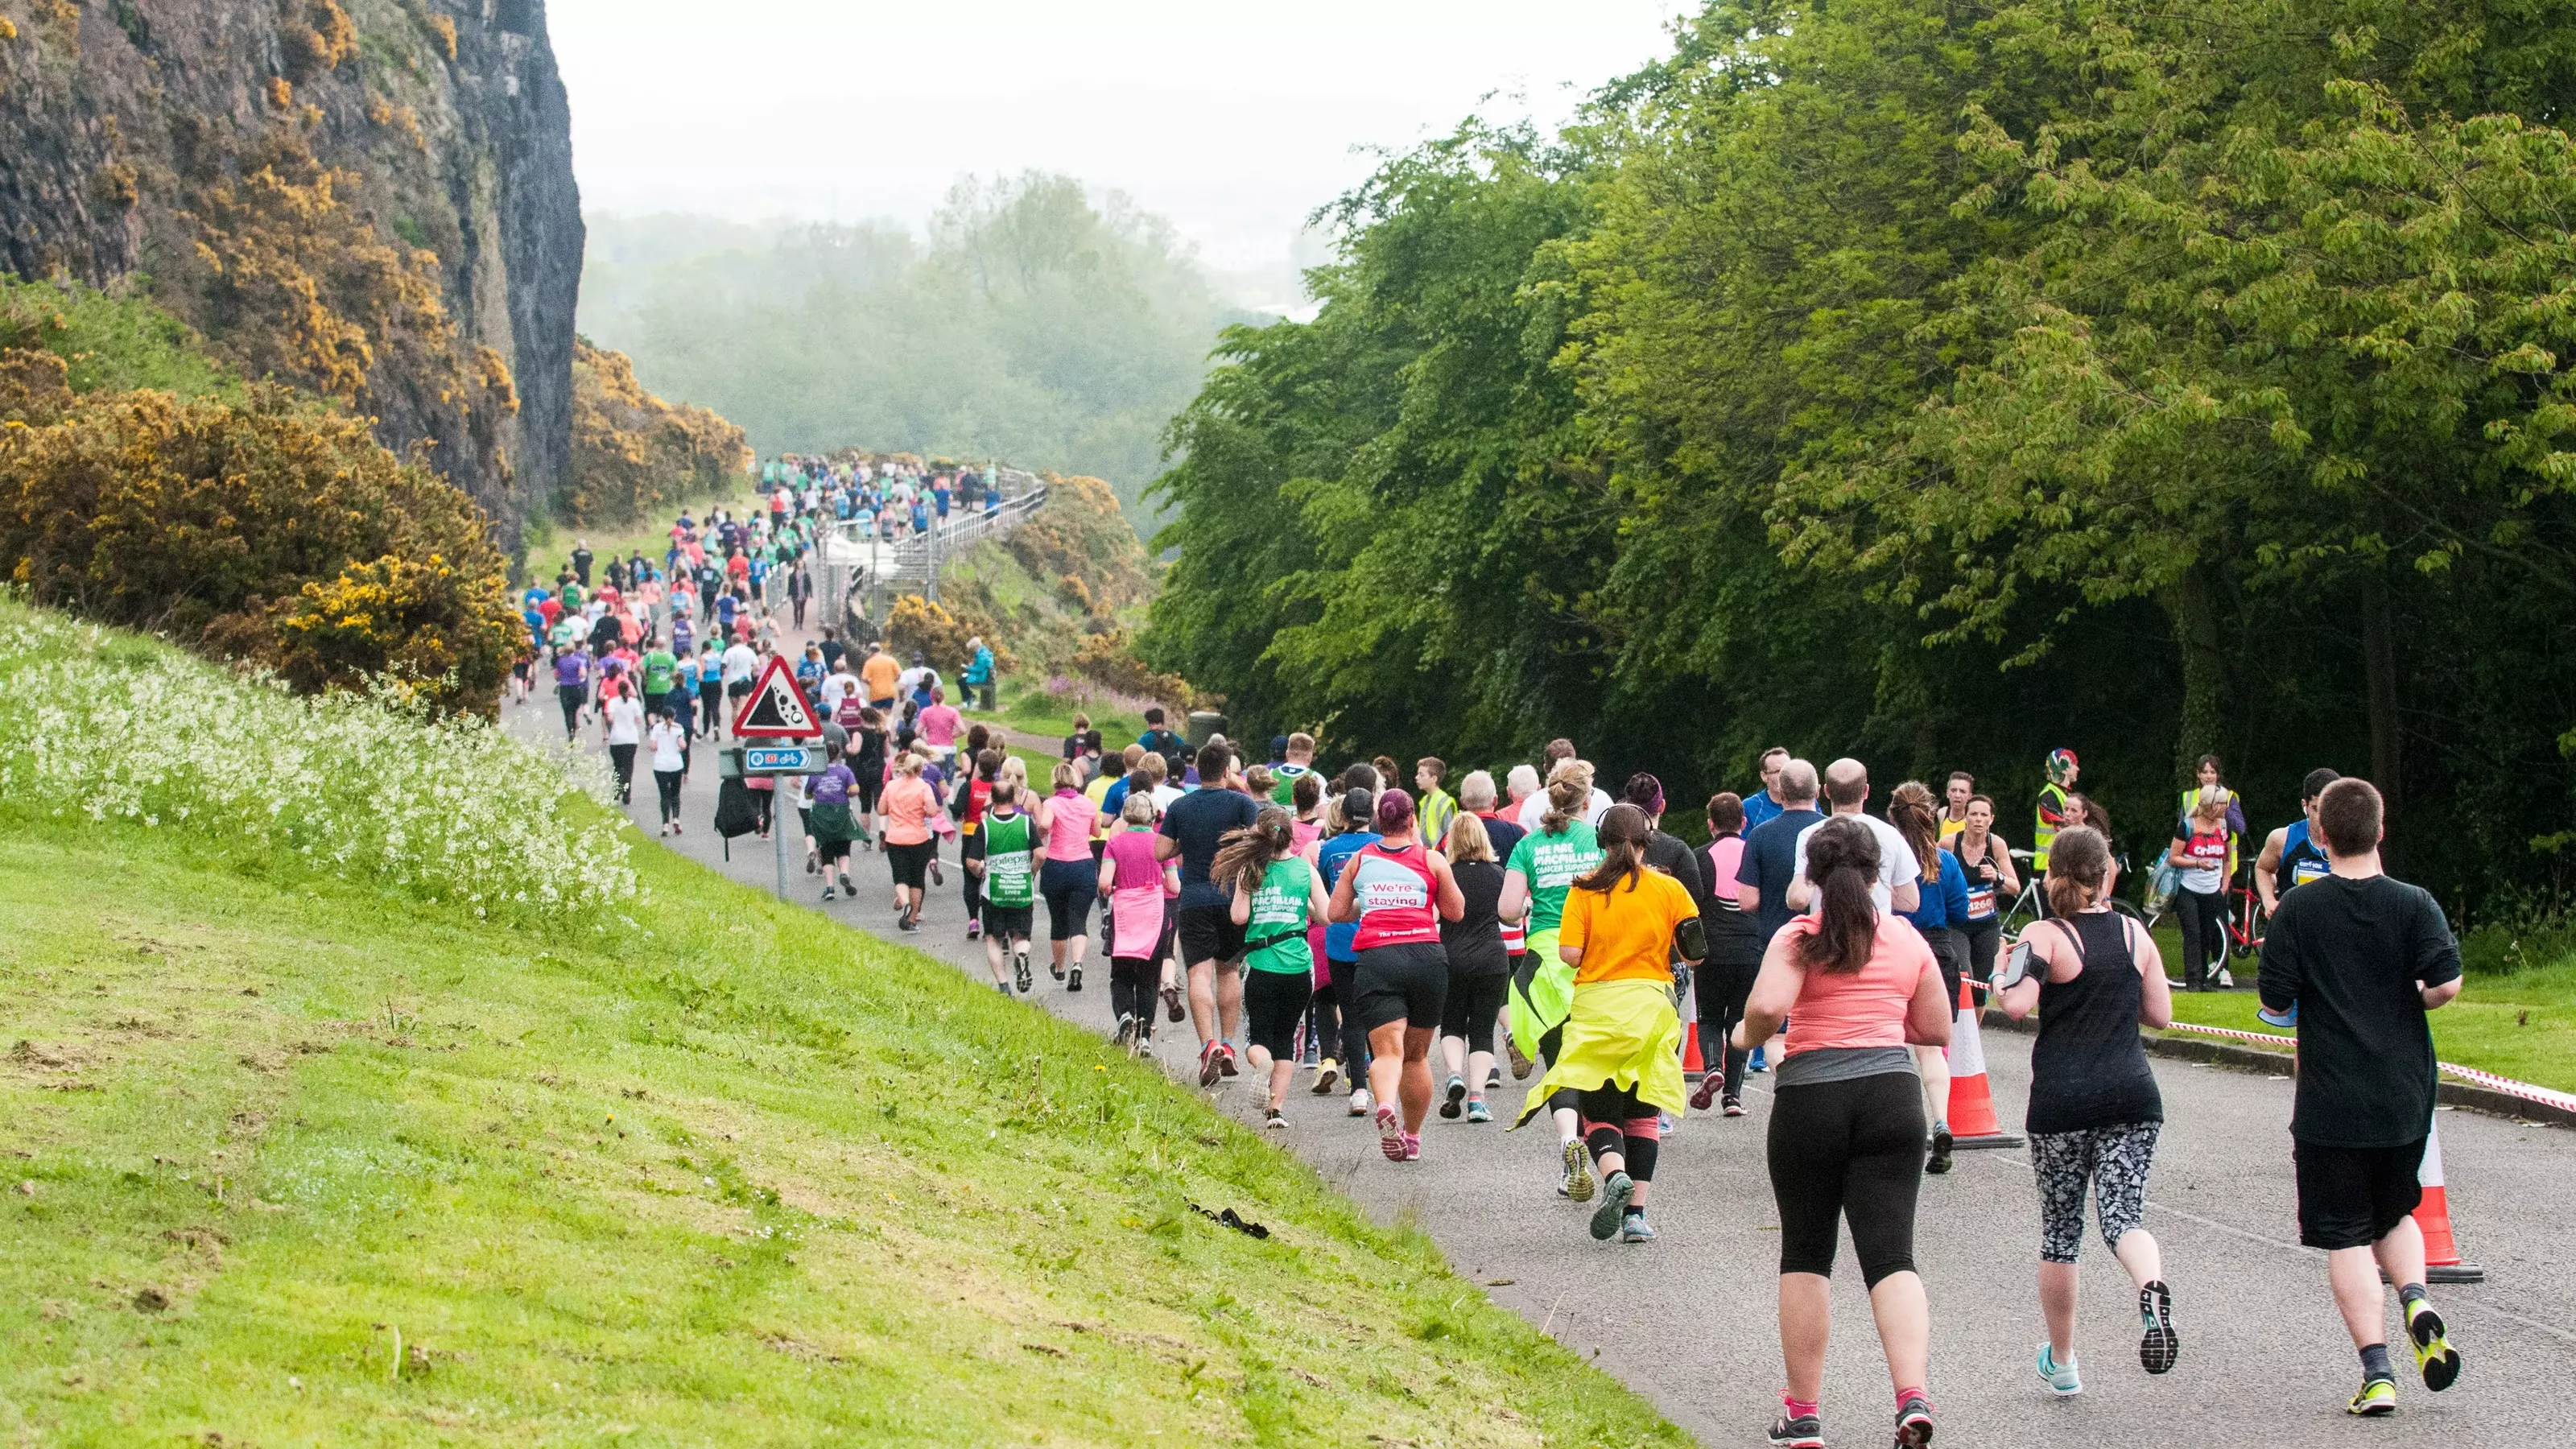 An image showing runners running through Edinburgh as part of the Edinburgh Half Marathon